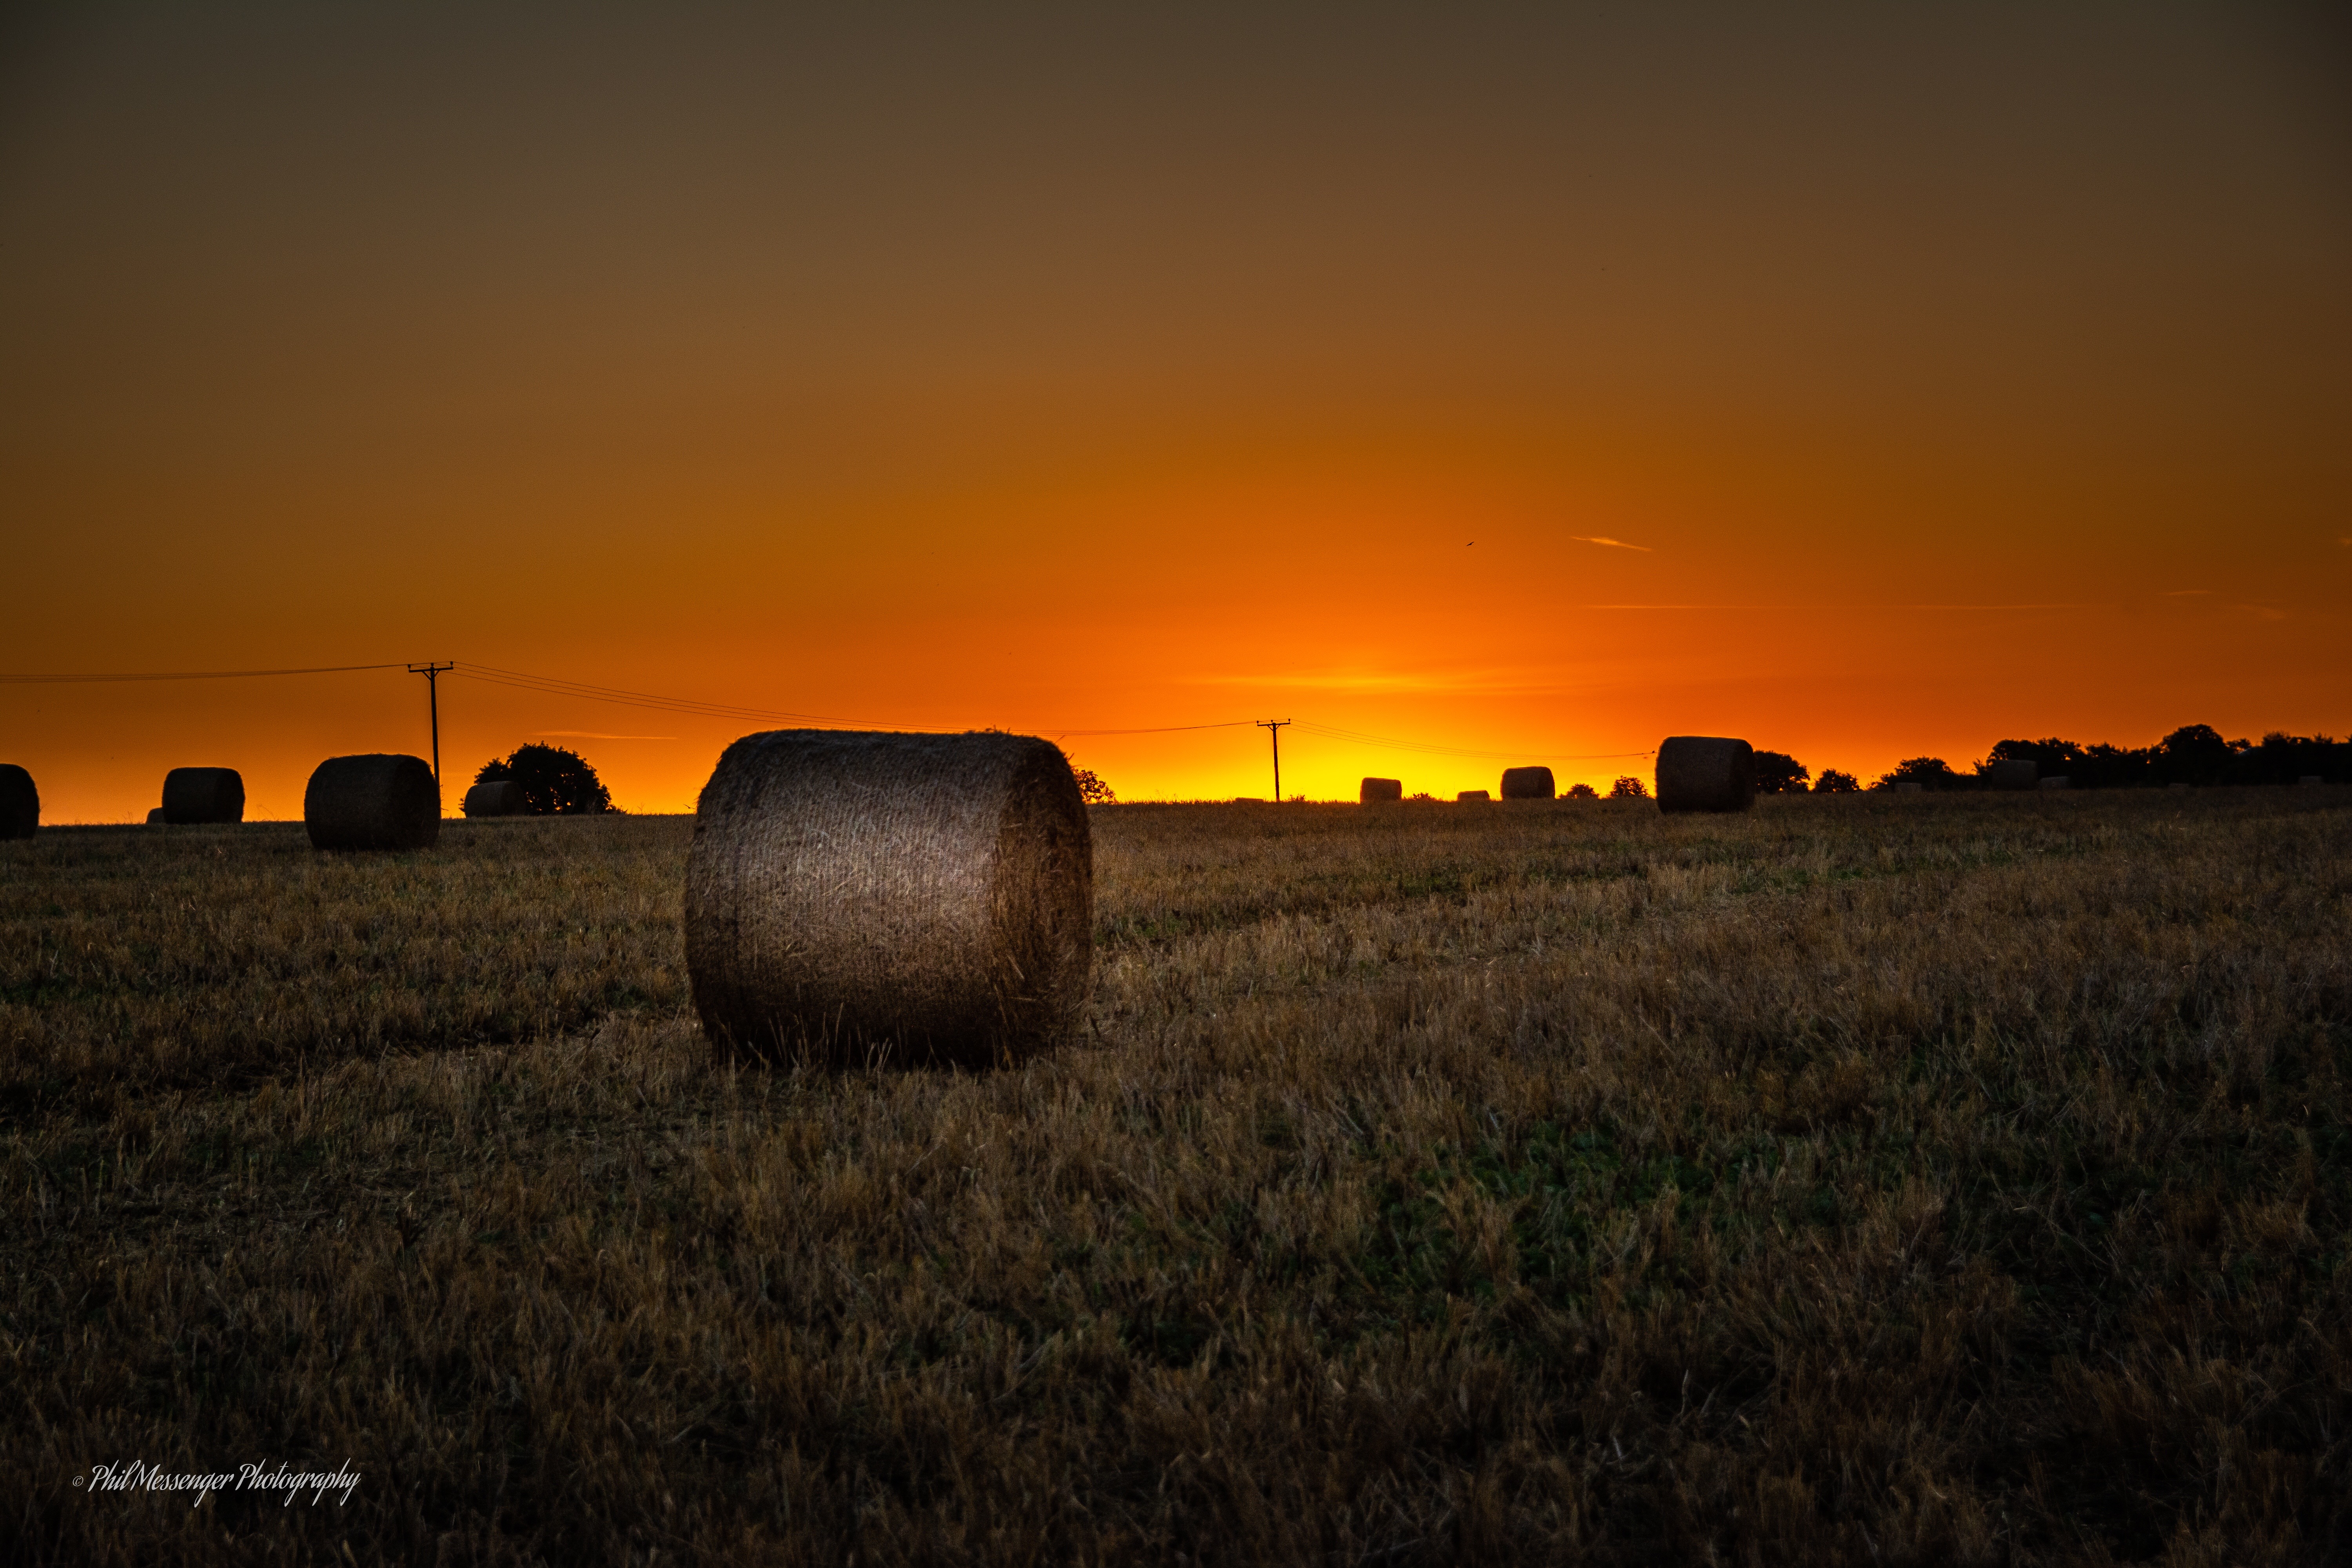 Early morning bales at Sevenhampton, Wiltshire